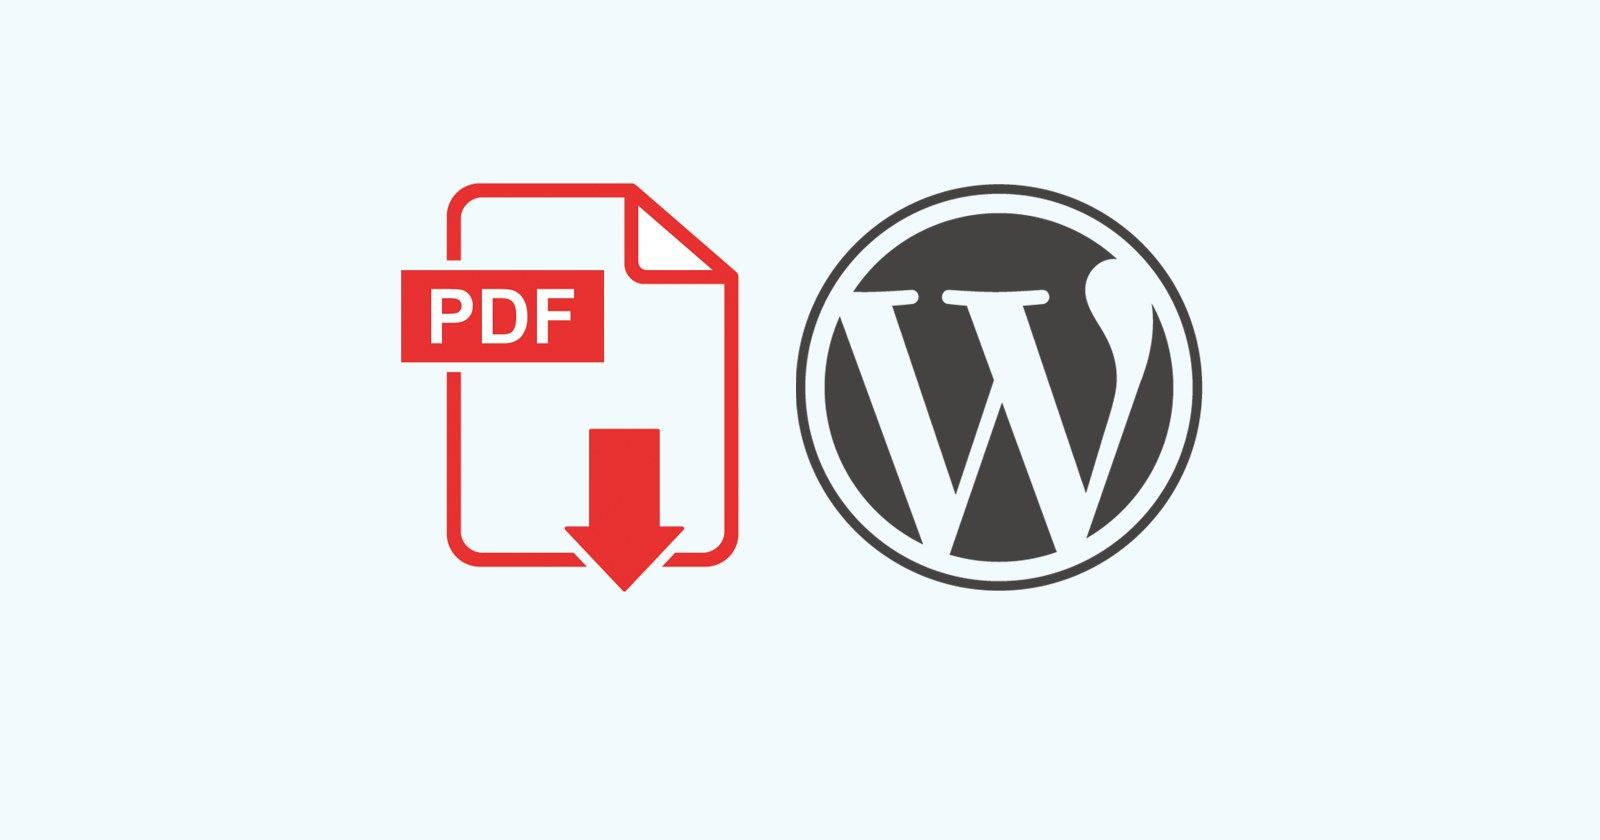 Você está visualizando atualmente New Adobe PDF WordPress Plugin Radically Improves User Experience